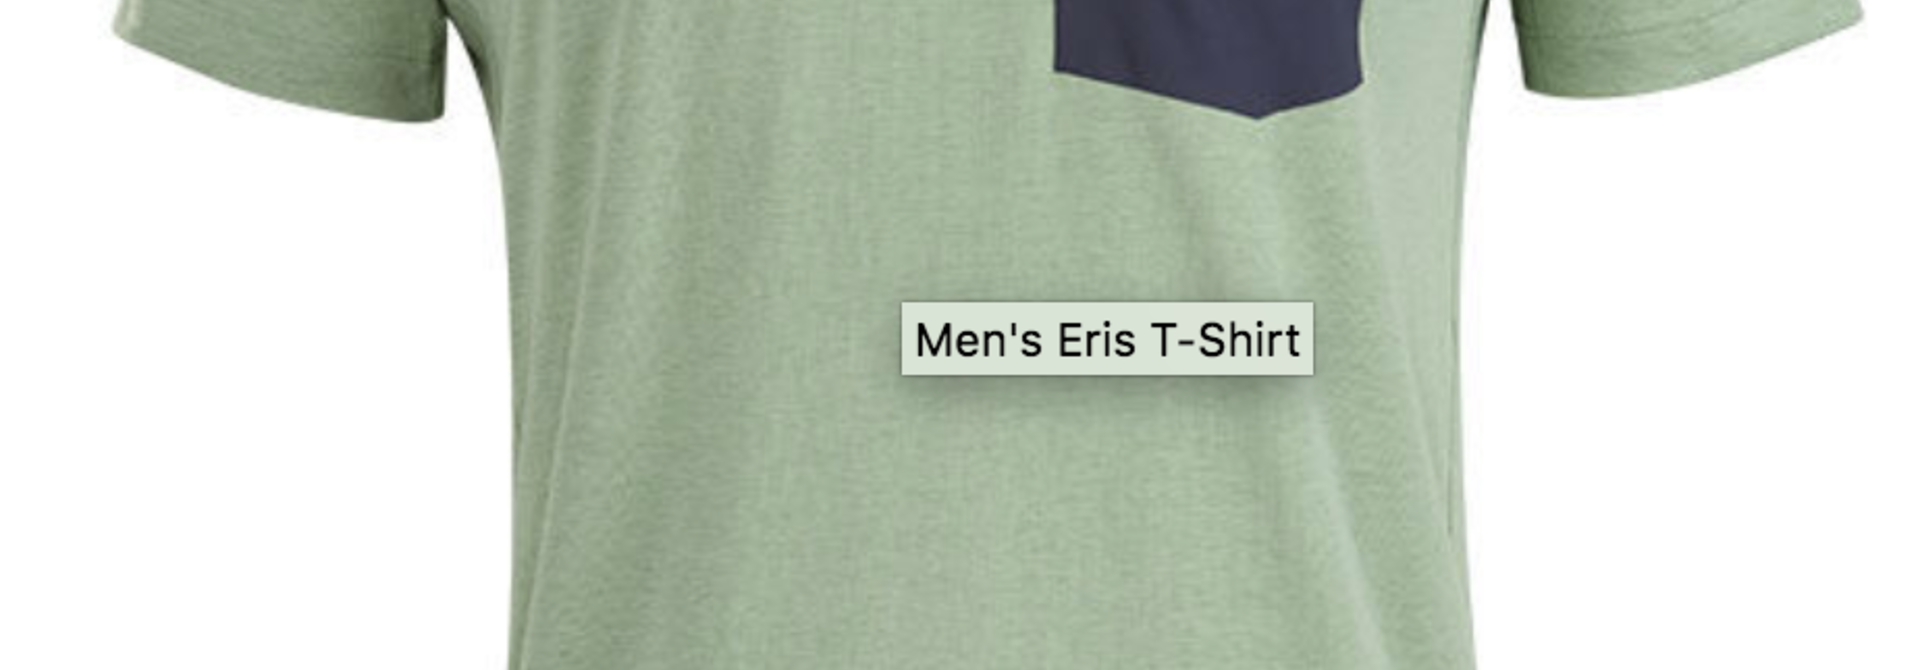 Men's Eris T-Shirt